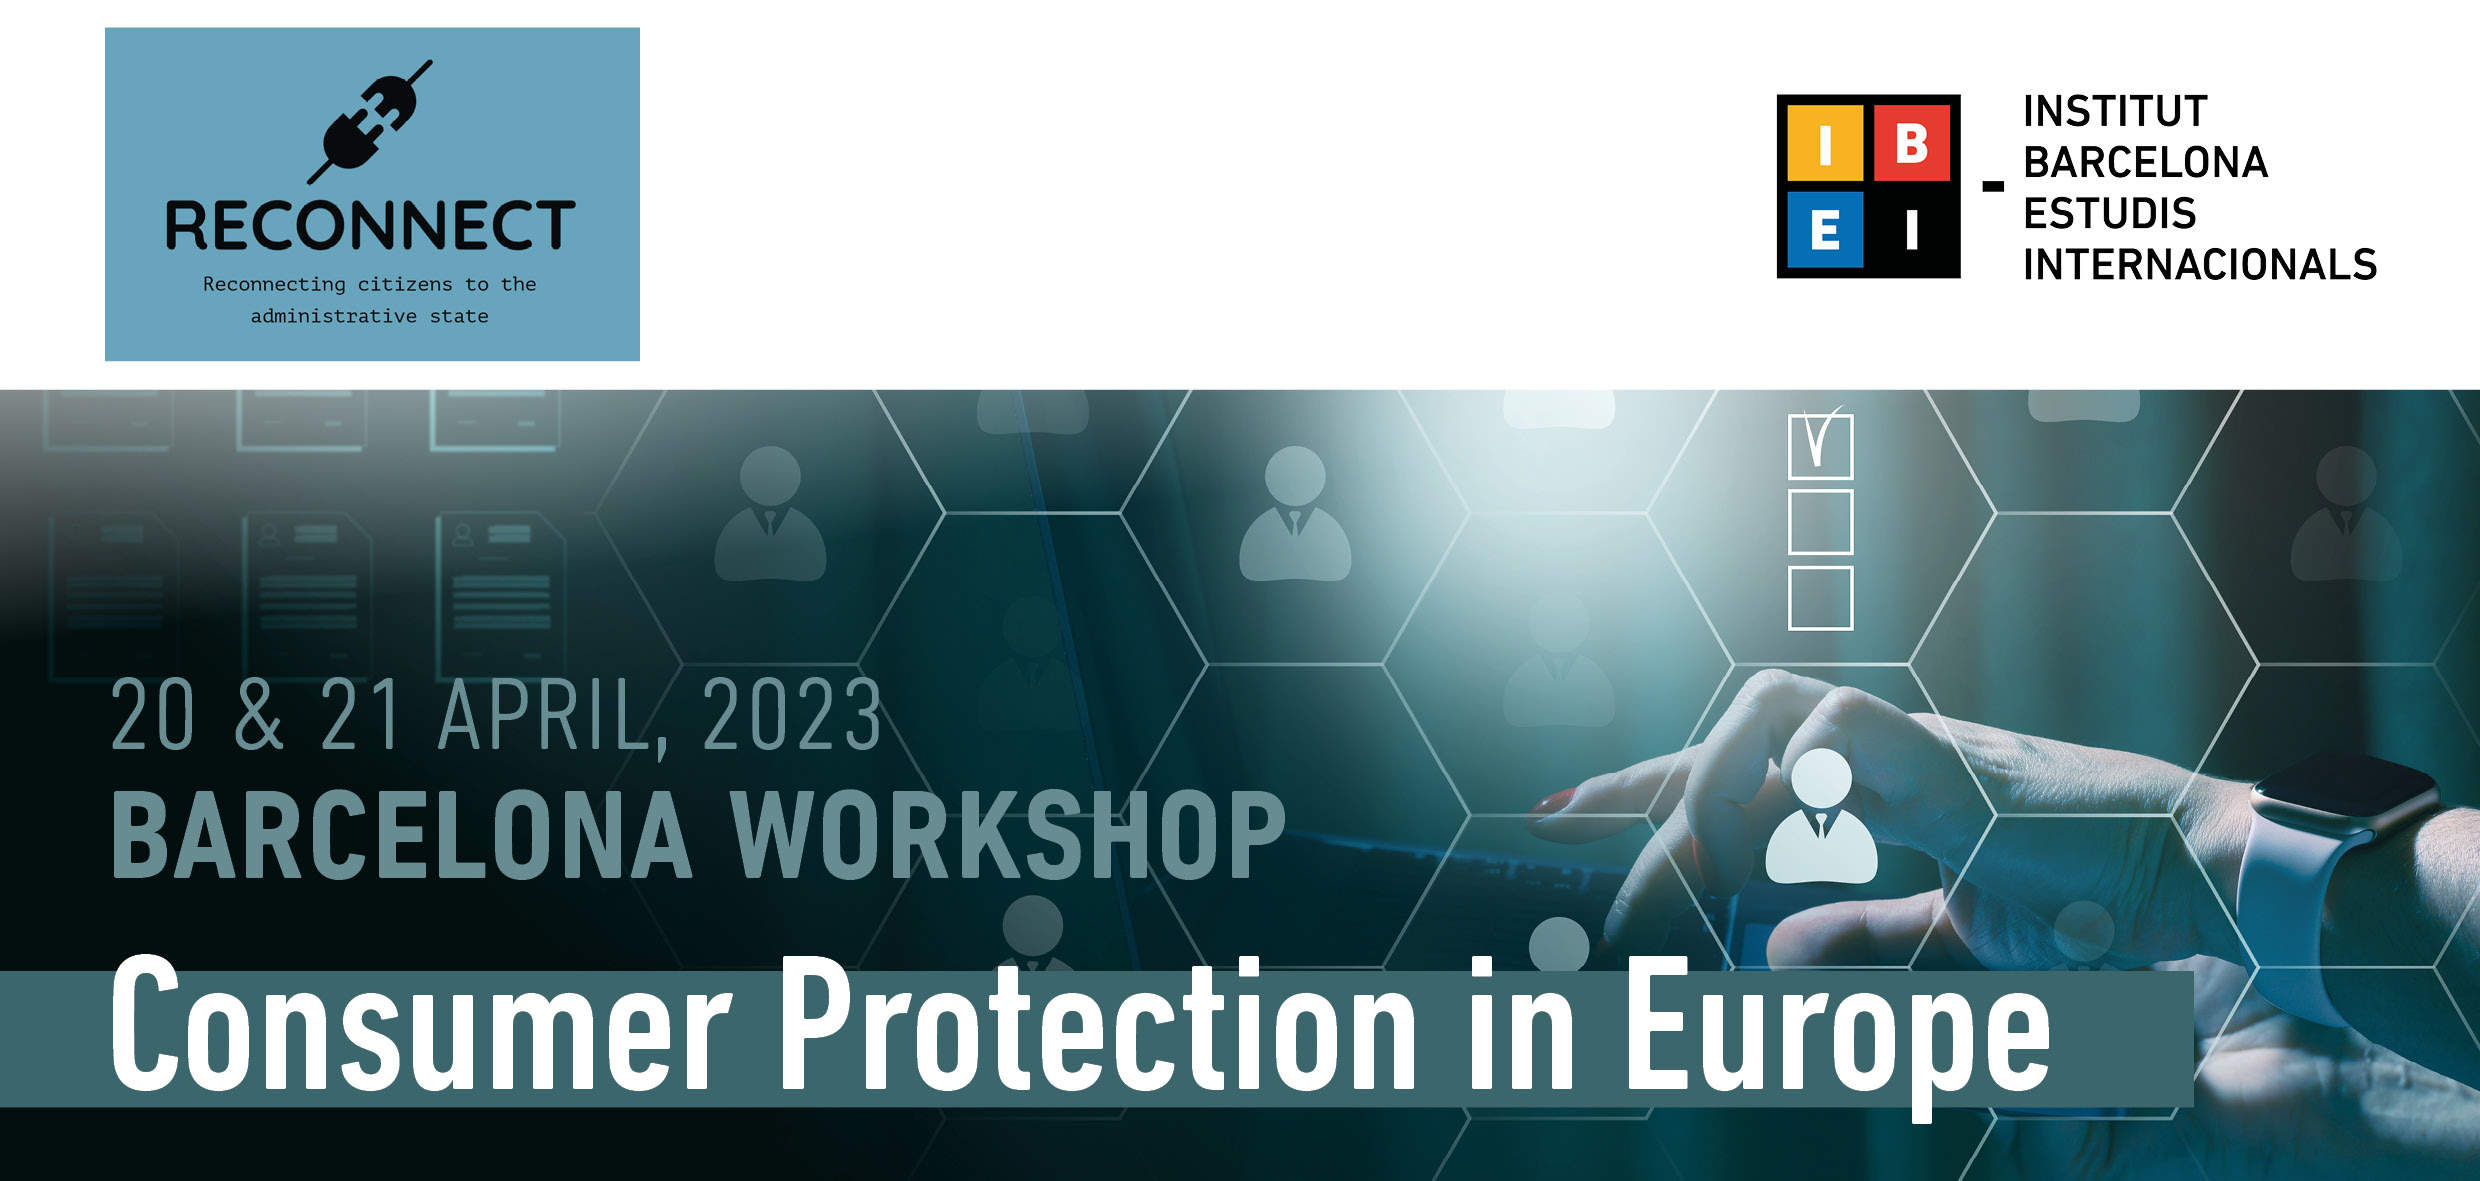 Barcelona Workshop on Consumer Protection in Europe_CAPÇALERA